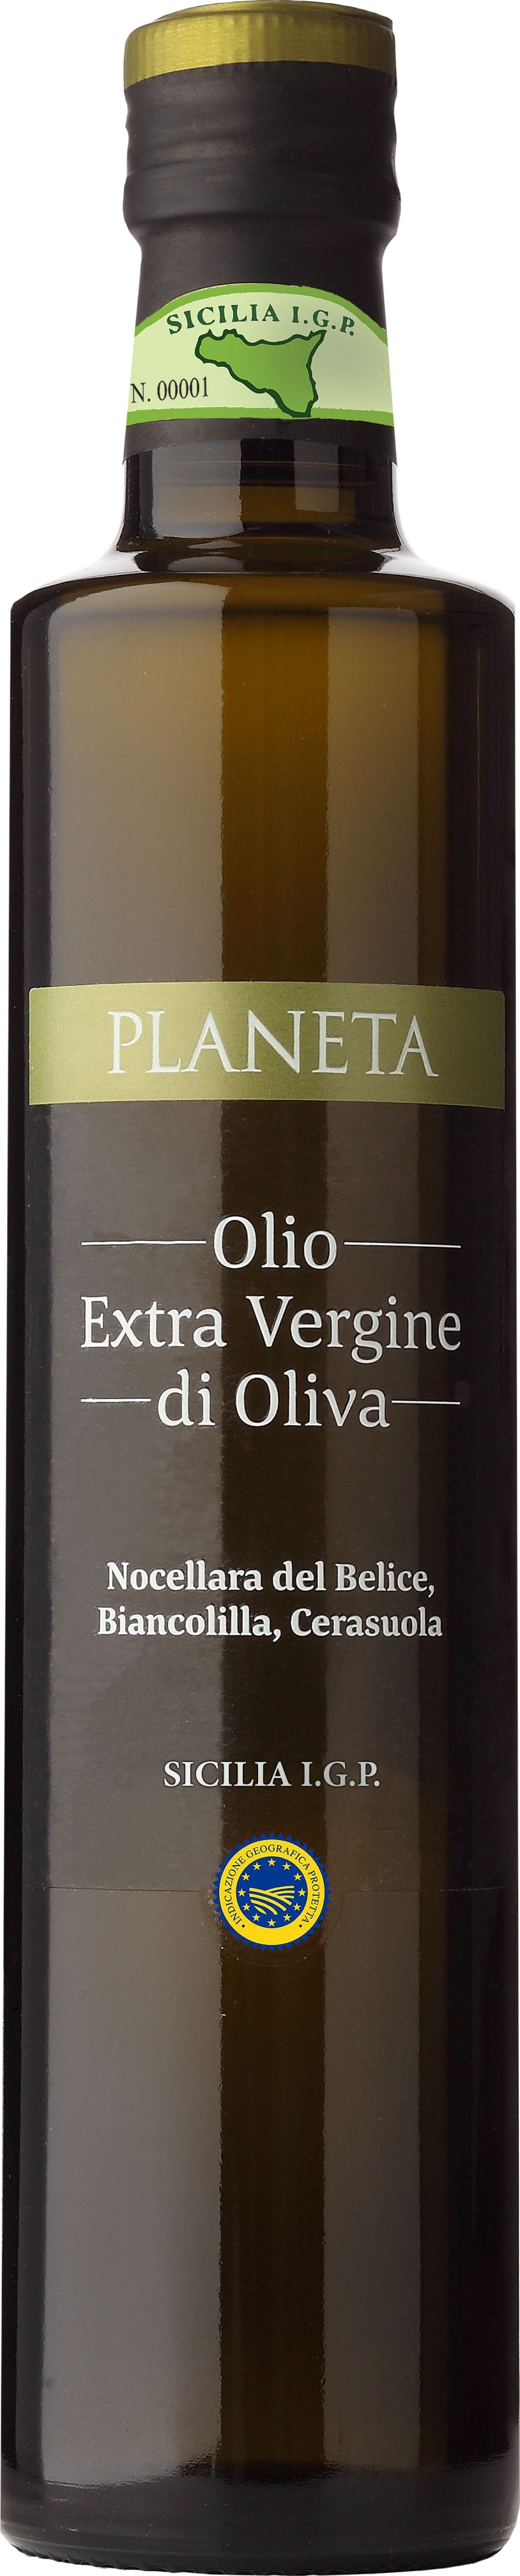 Olio EV di Oliva 22 Planeta 25cl - Buy Planeta Wines from GREAT WINES DIRECT wine shop